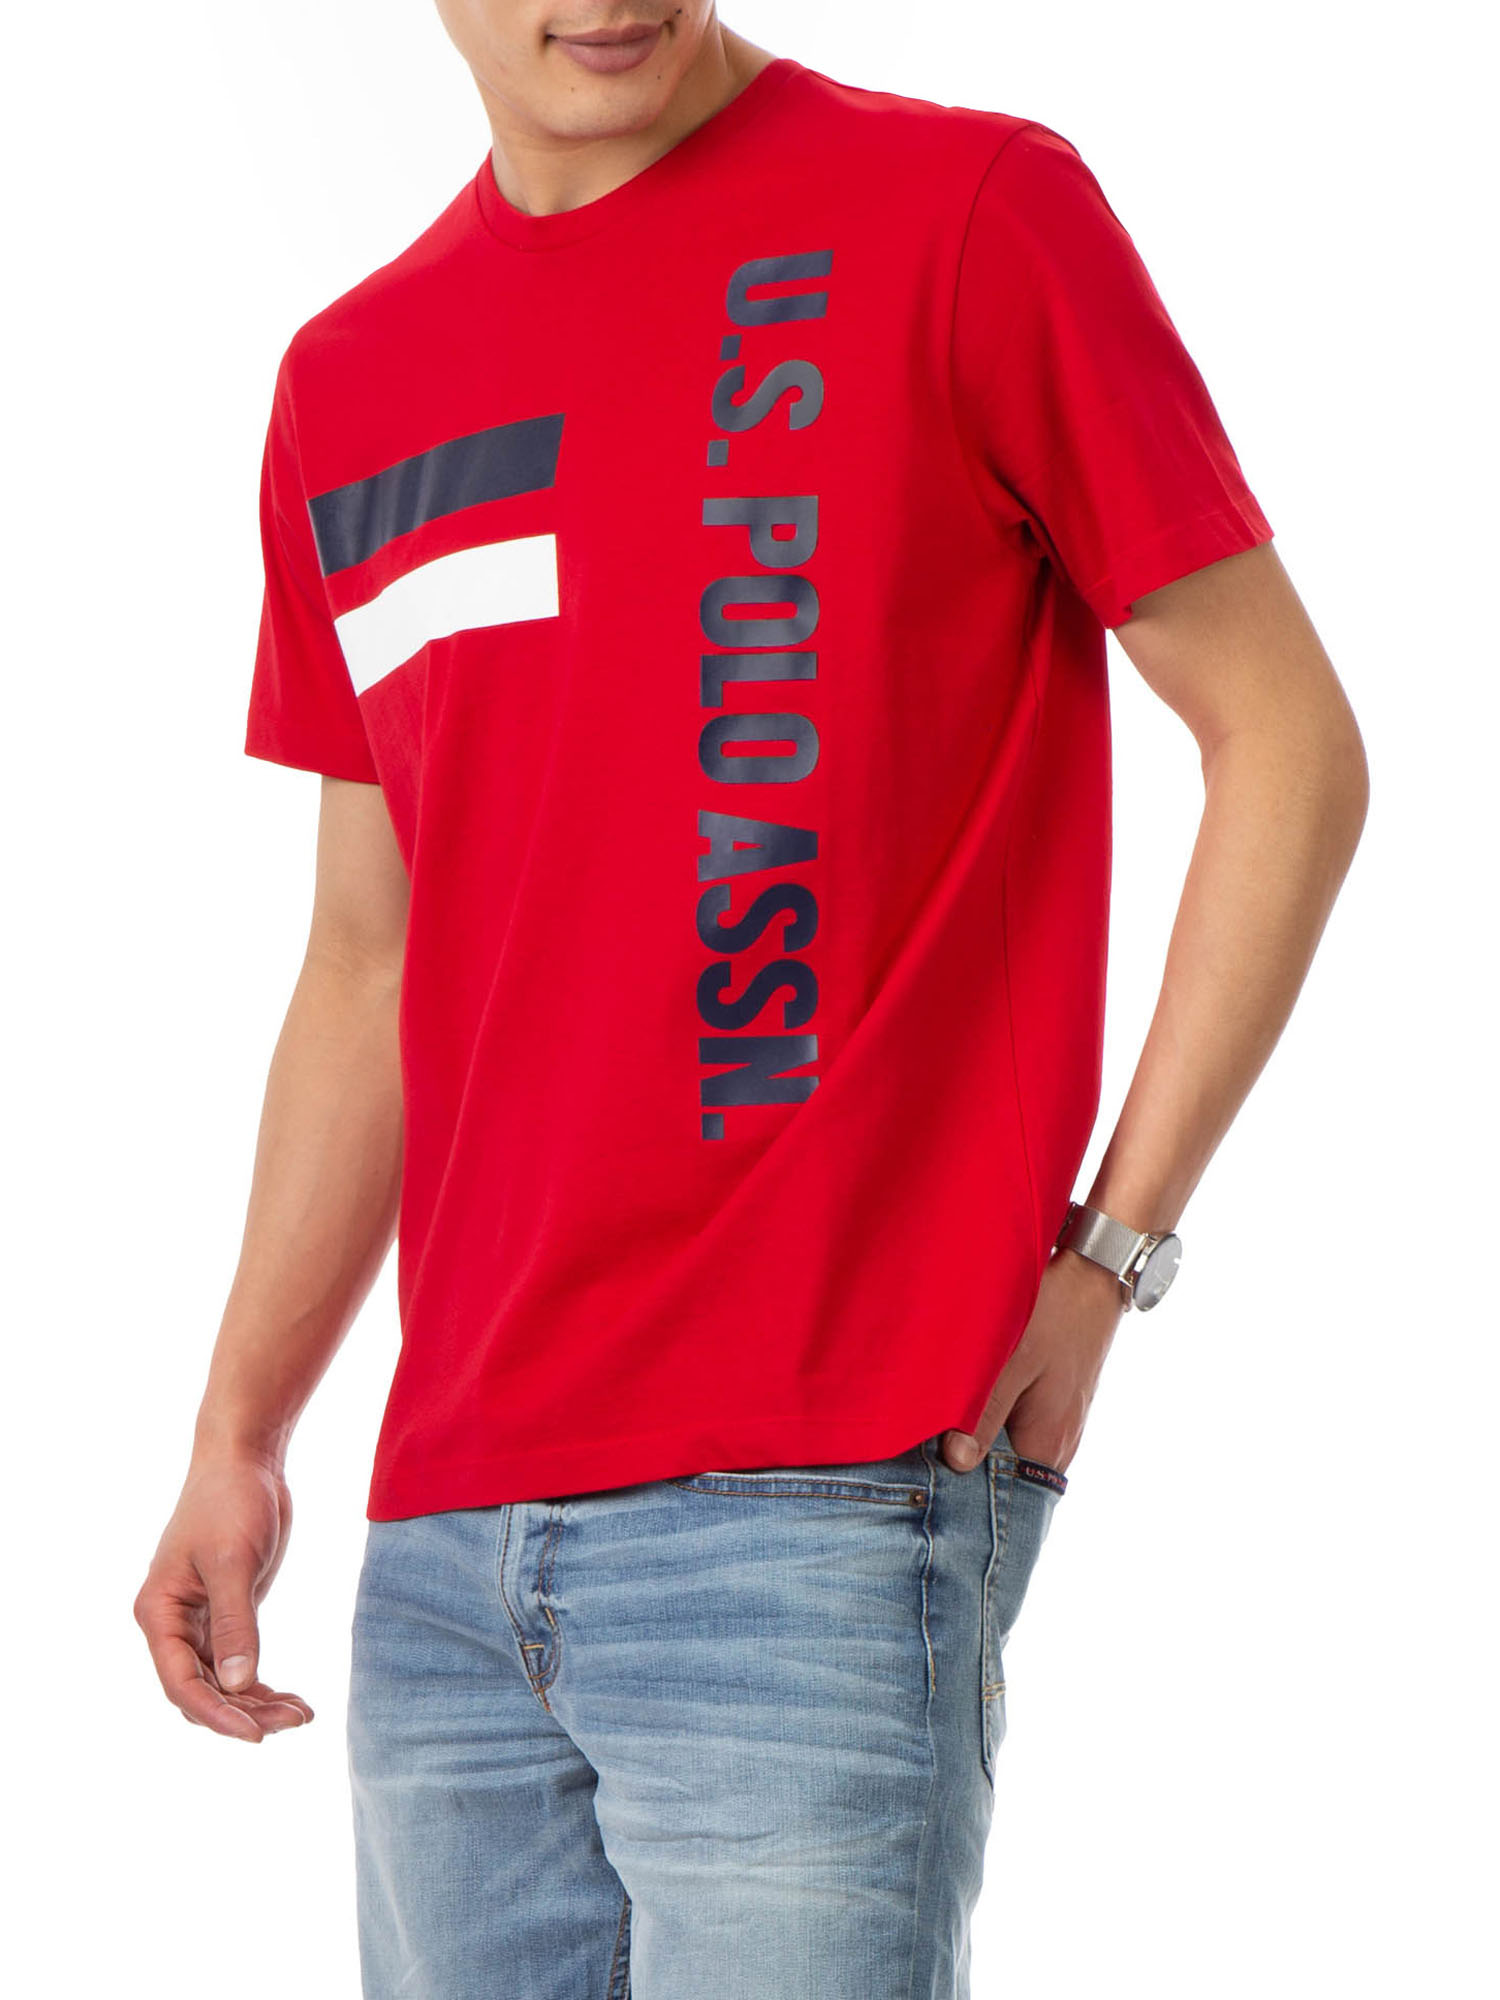 U.S. Polo Assn. Men's Short Sleeve Printed T-Shirt - image 4 of 5